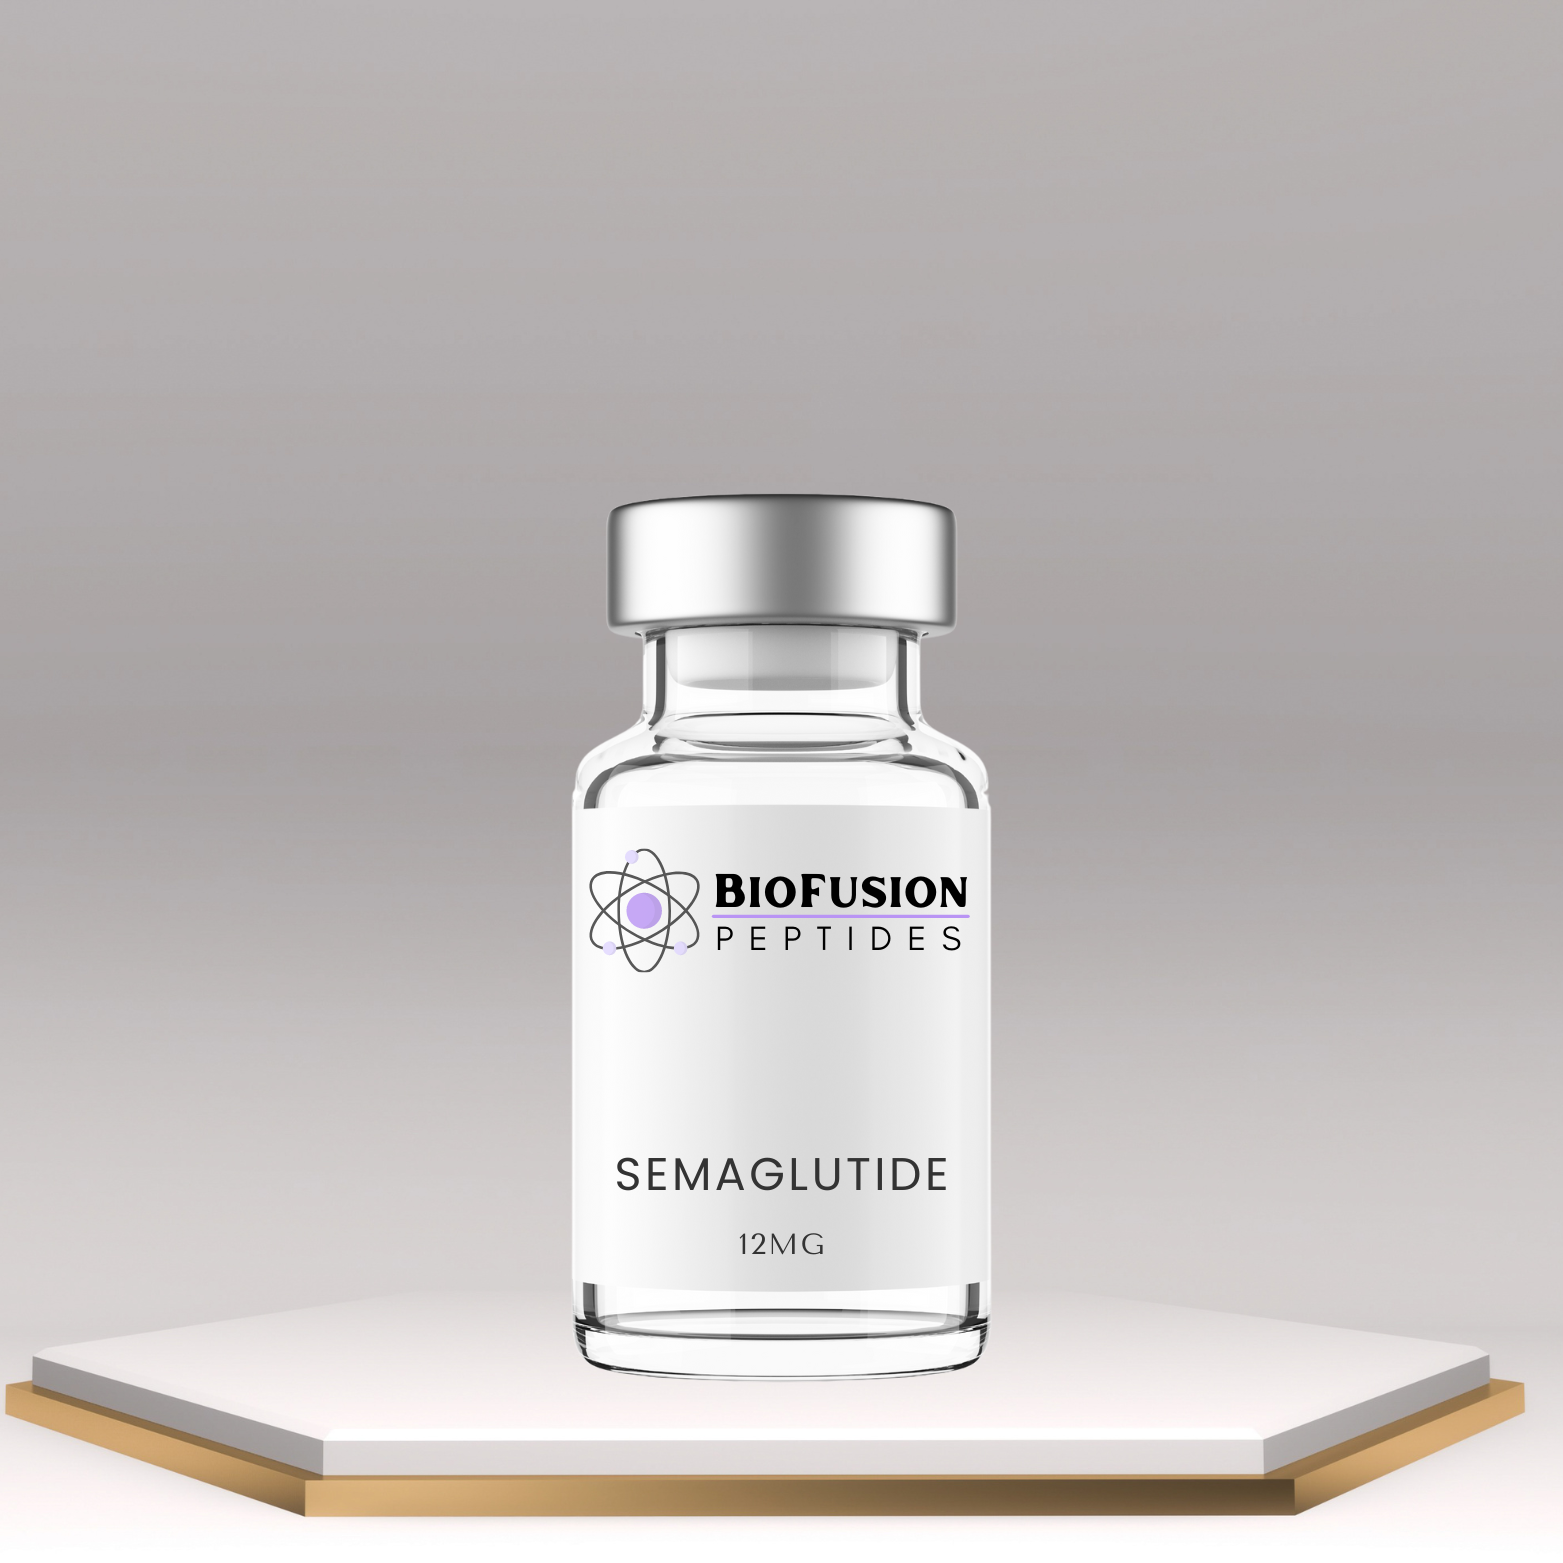 BioFusion Peptides Semaglutide 12mg vial